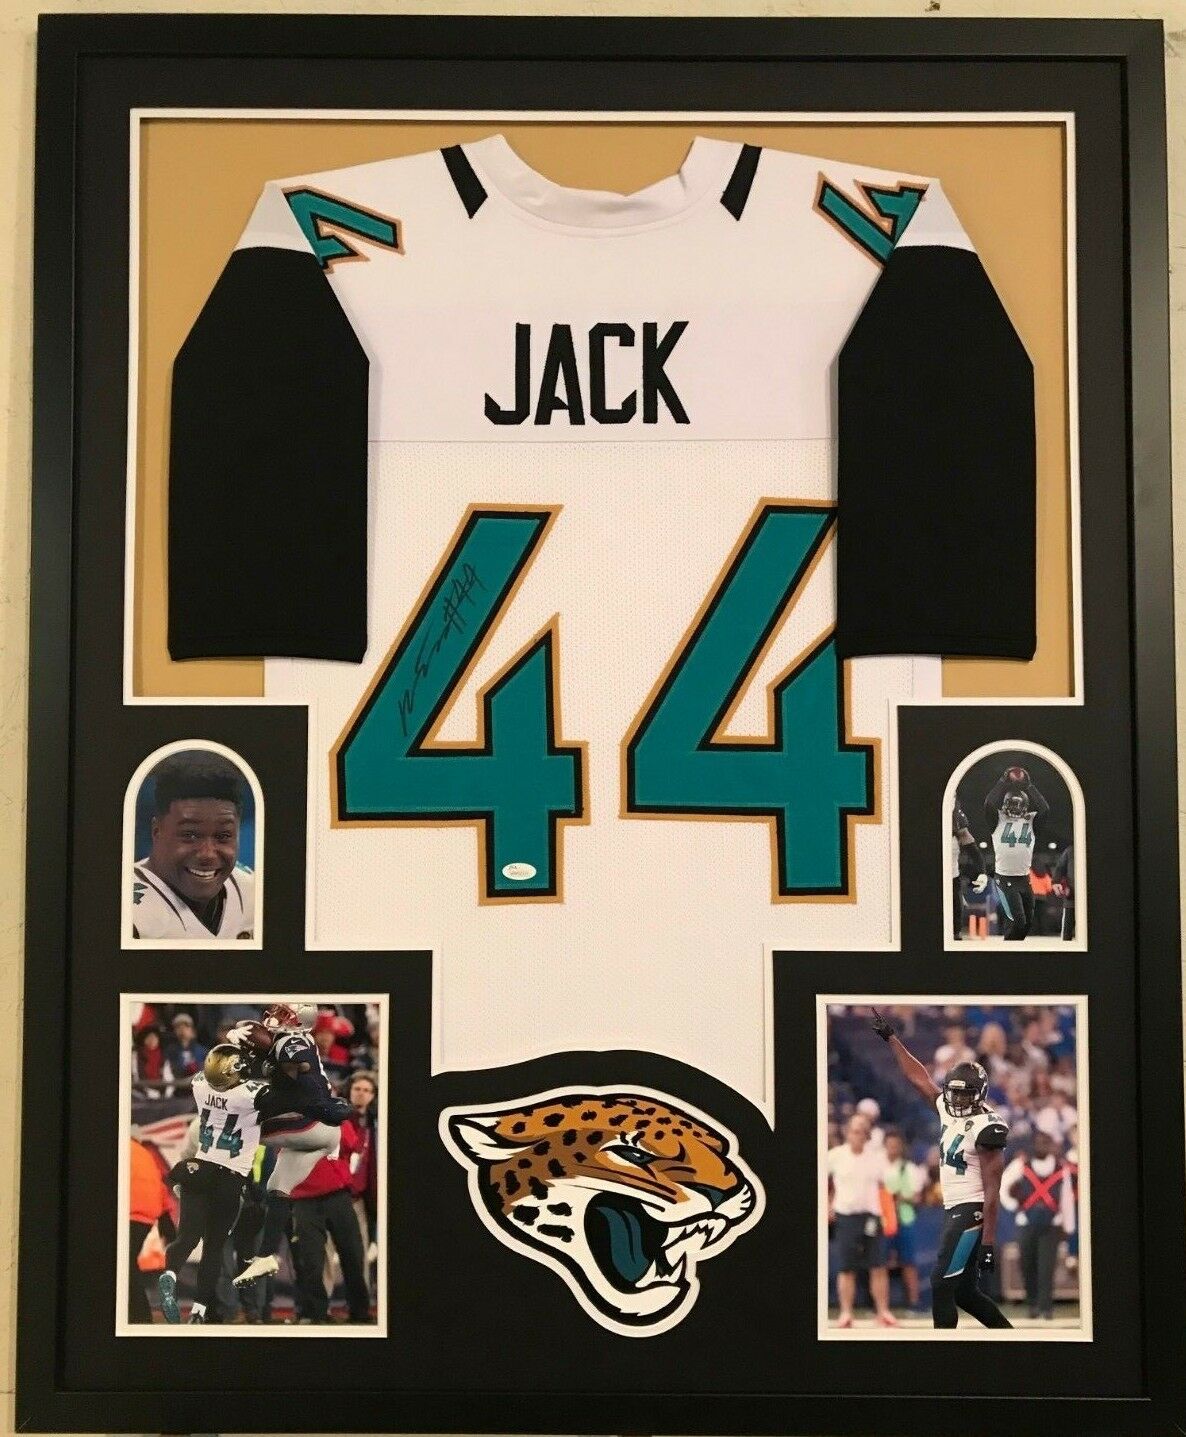 myles jack jaguars jersey